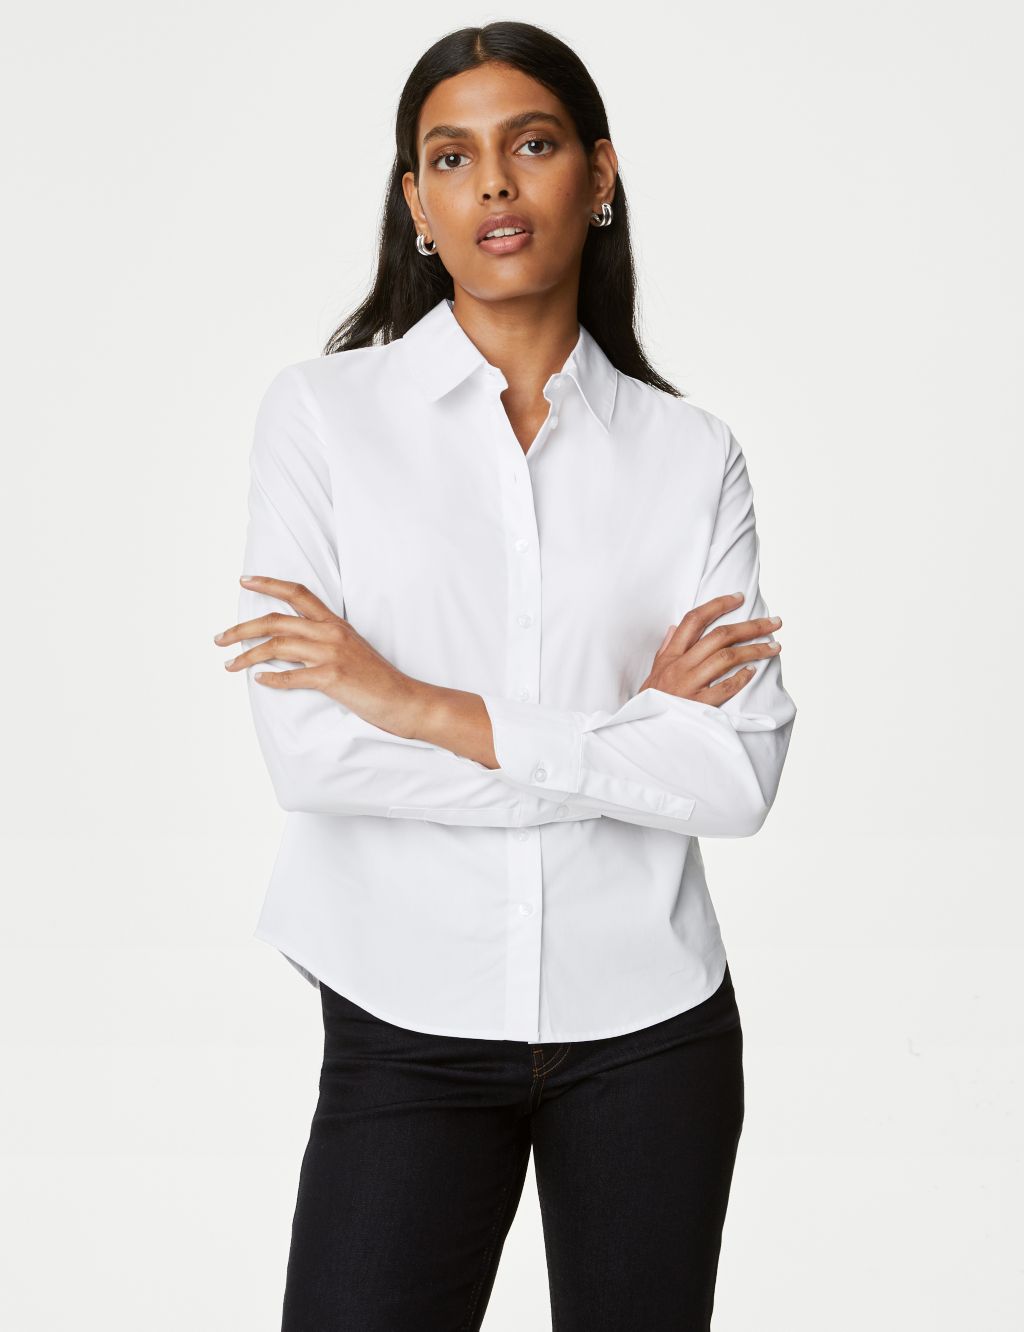 Women's White Shirts & Blouses | M&S